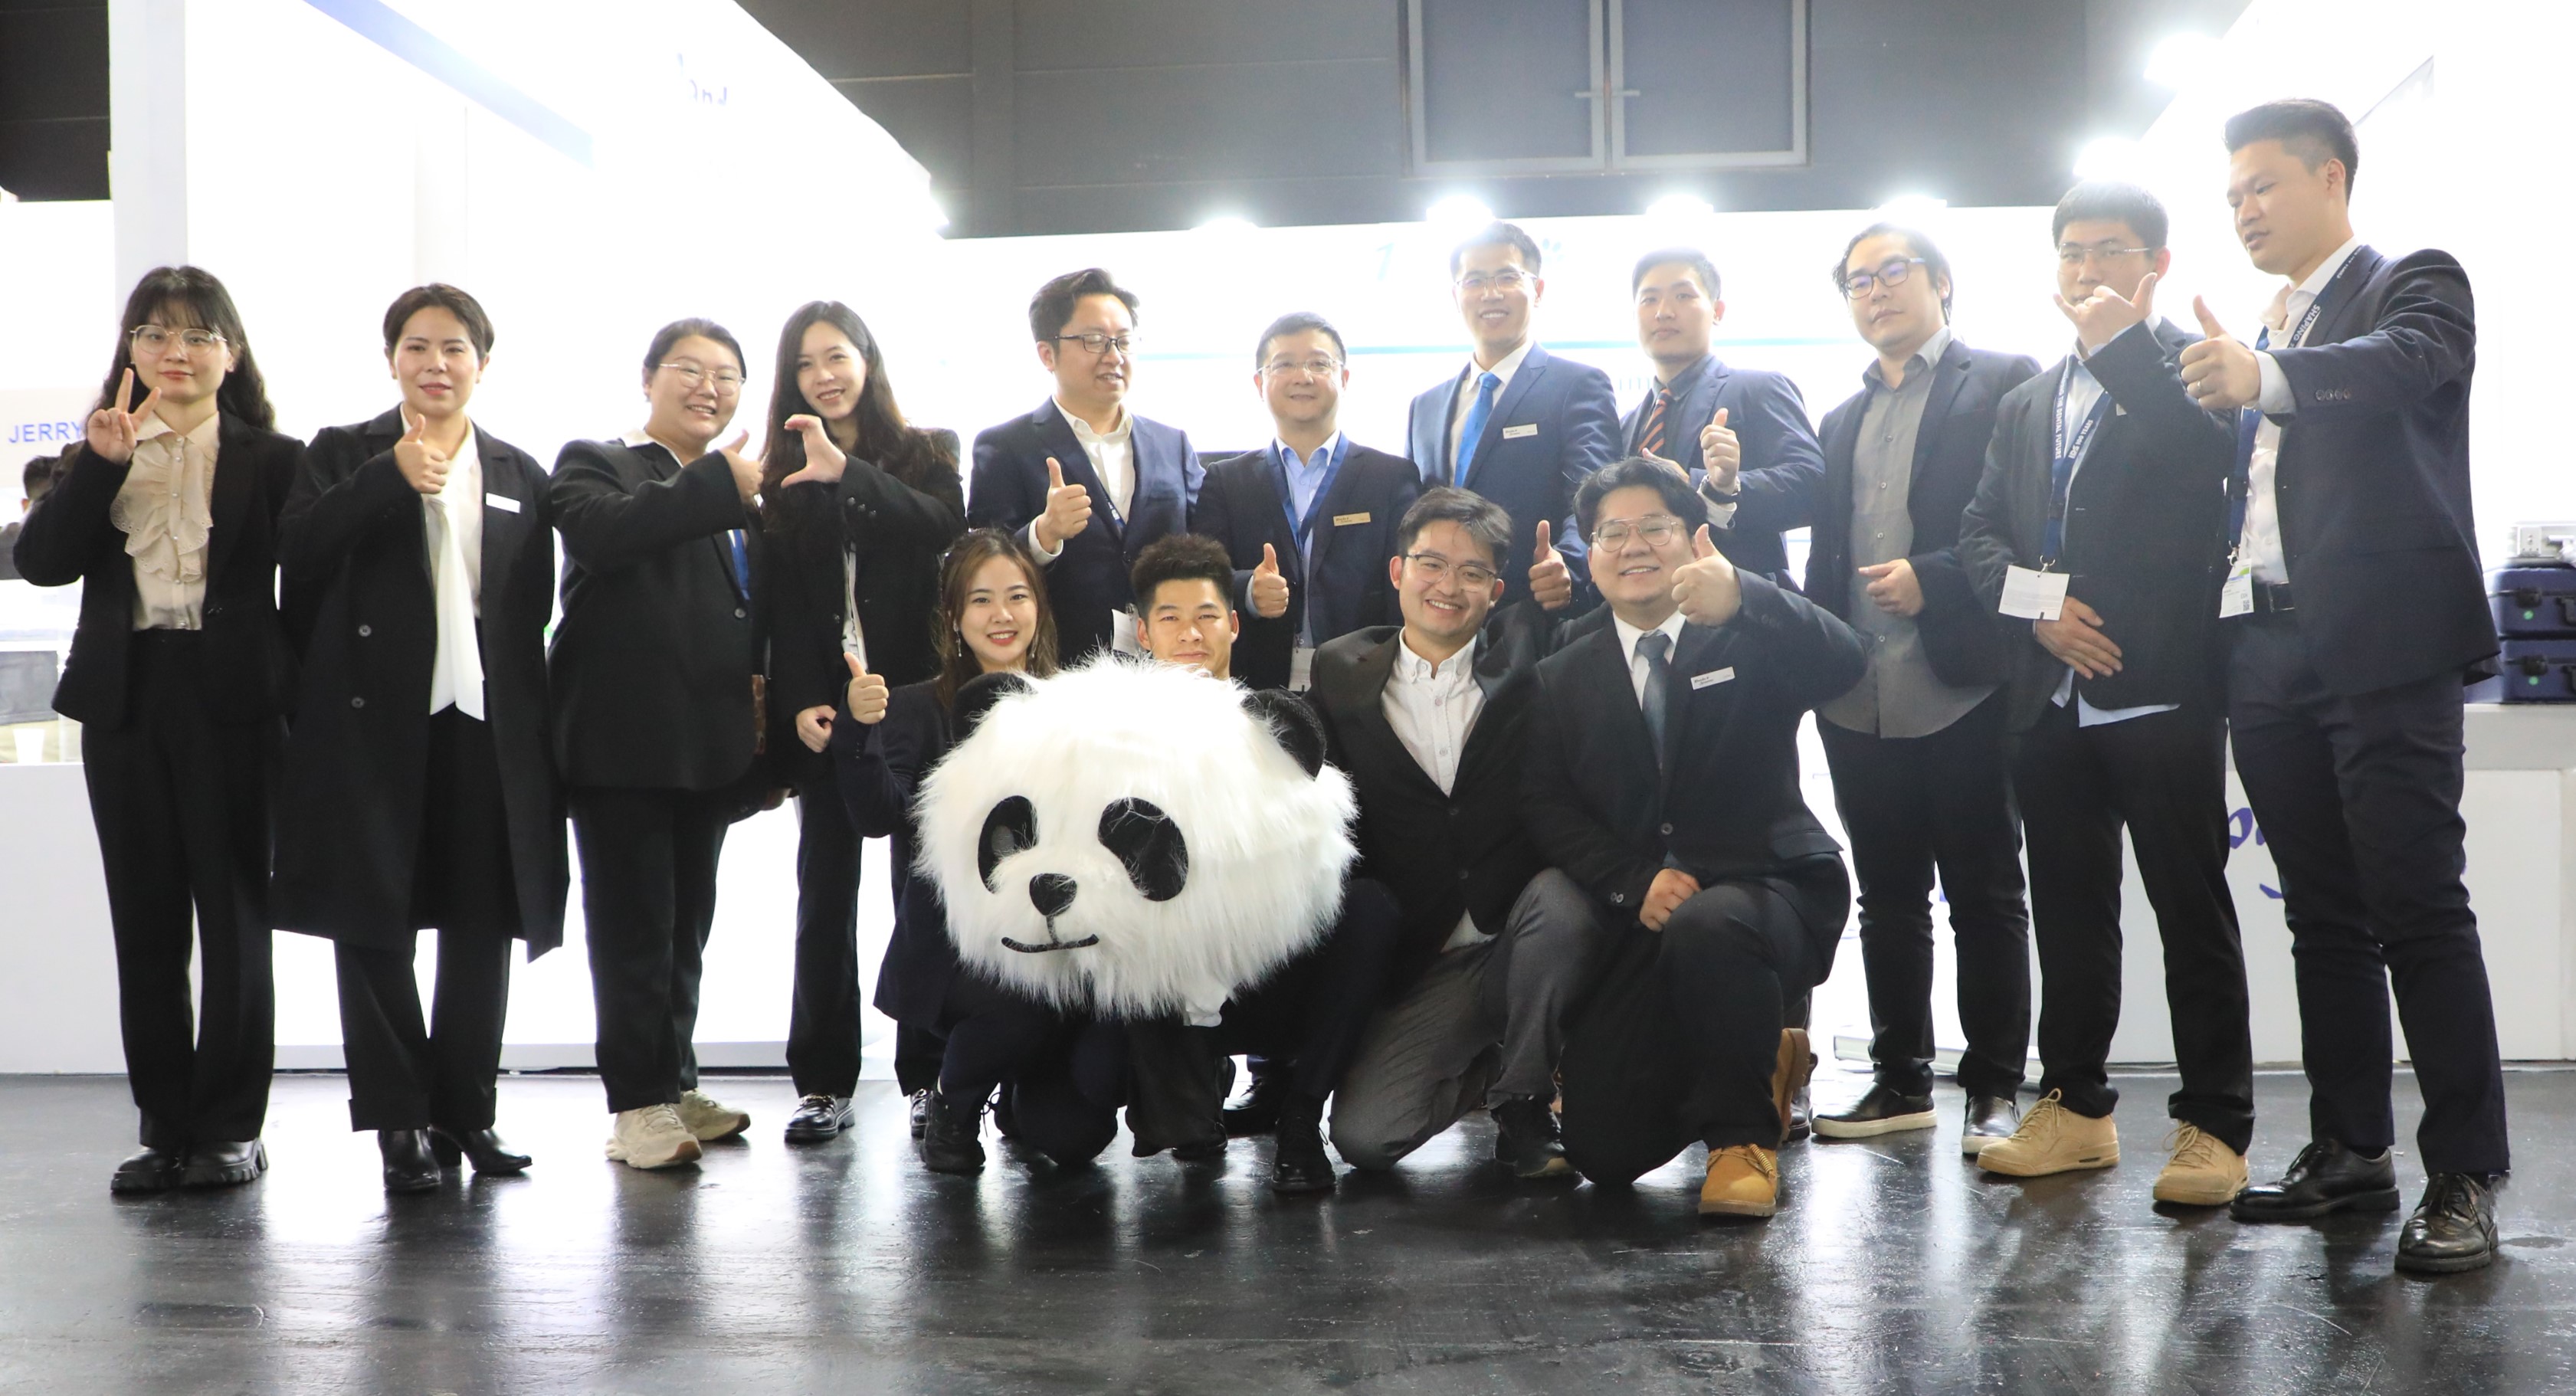 Panda Scanner Showcased PANDA smart Intraoral Scanner at IDS